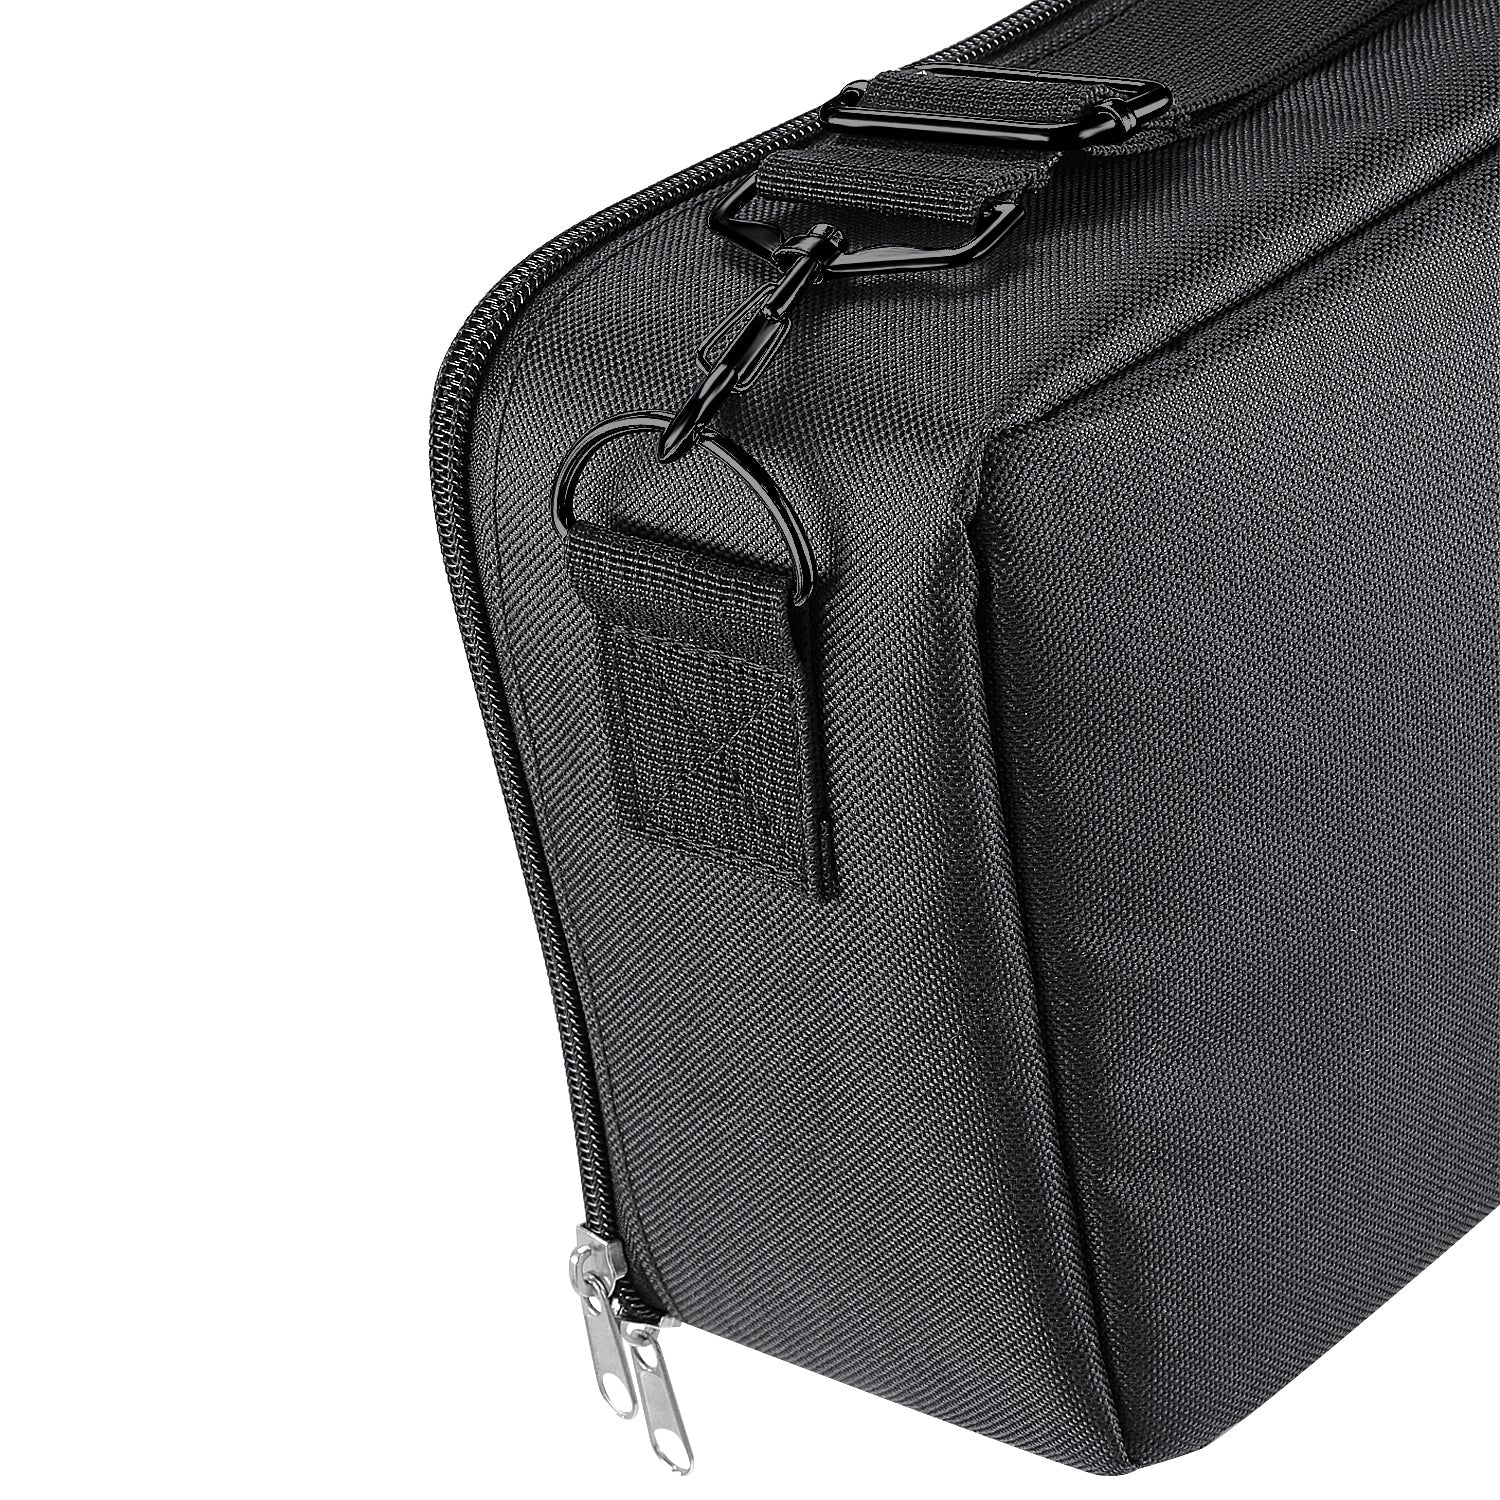 Neewer 30x7x3.7/76x17x9.5CM Photo Video Studio Kit Large Carrying Zipper Bag